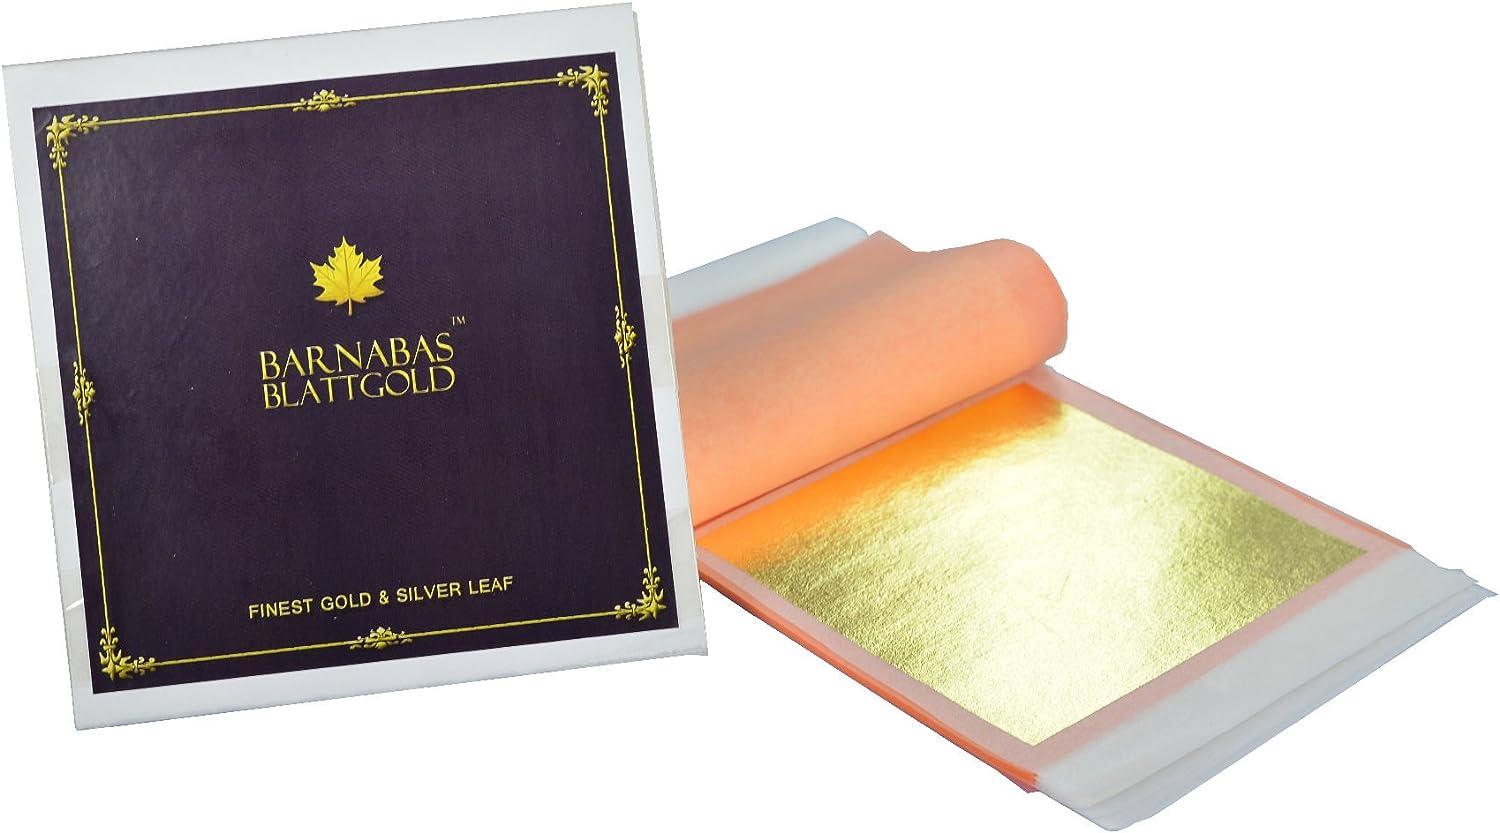 Original 24K 100% Edible Gold Leaf Transfer Sheets - Premium Quality